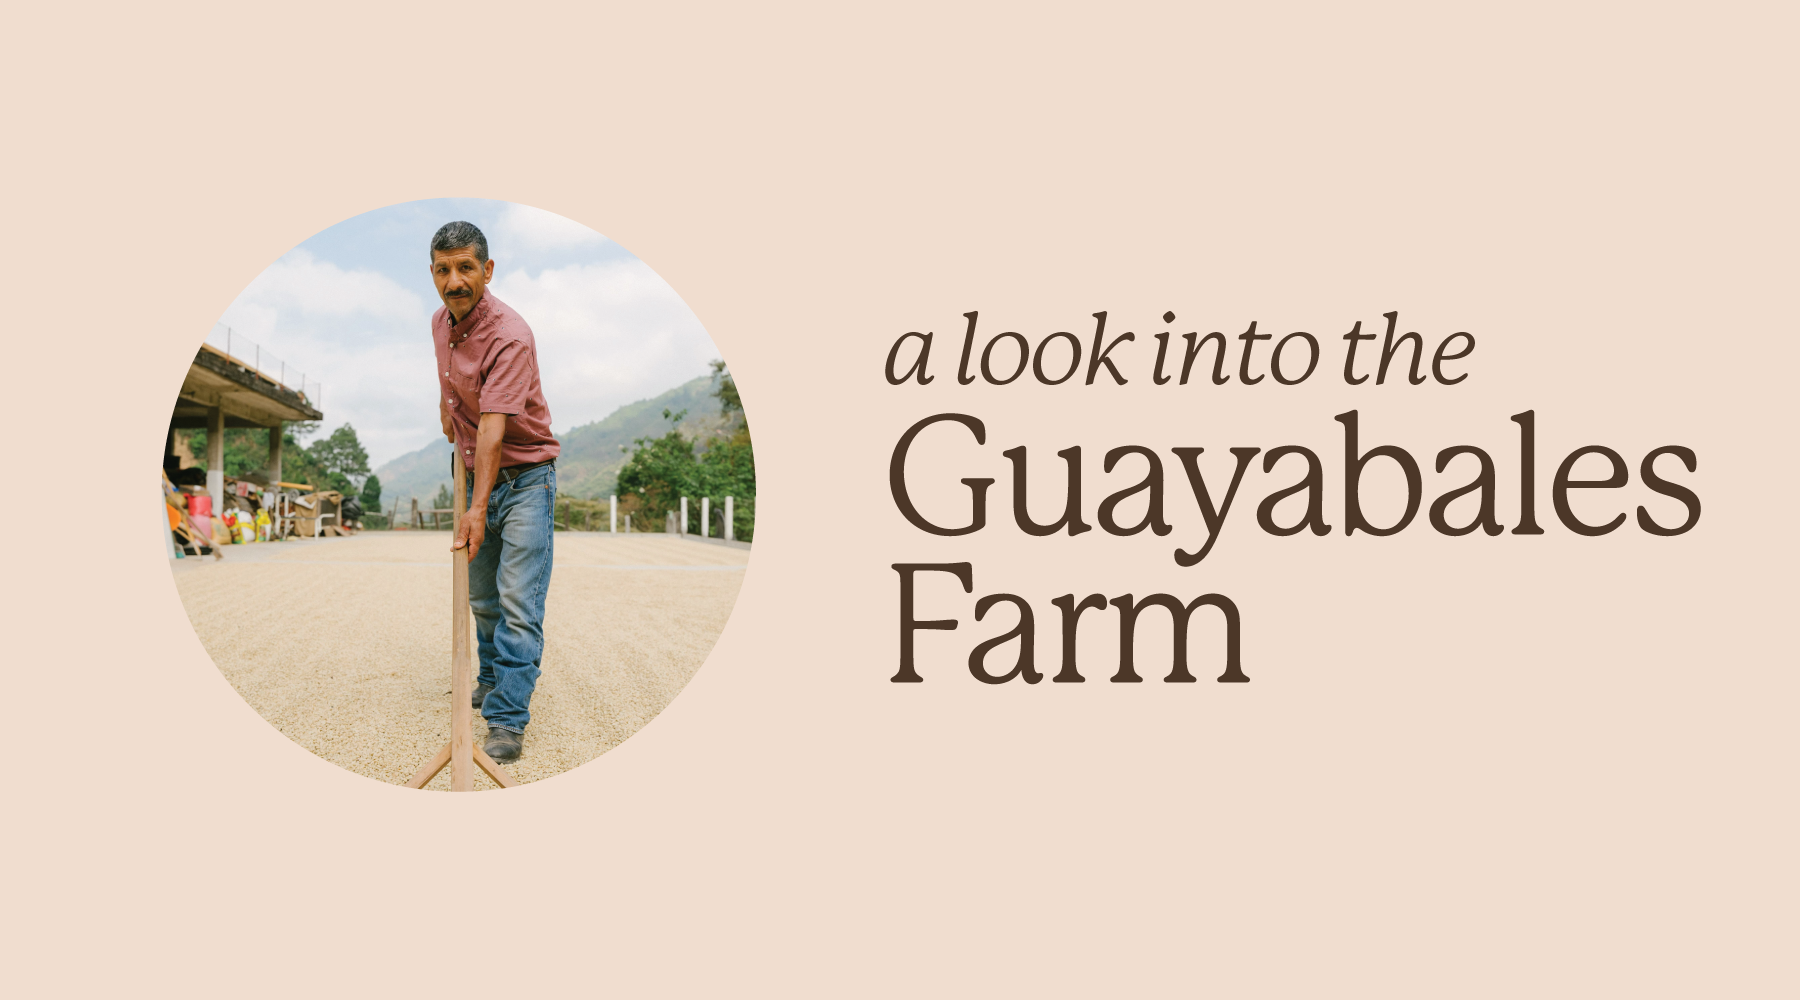 Guatemalan man raking coffee with text "a look into the Guayabales Farm"